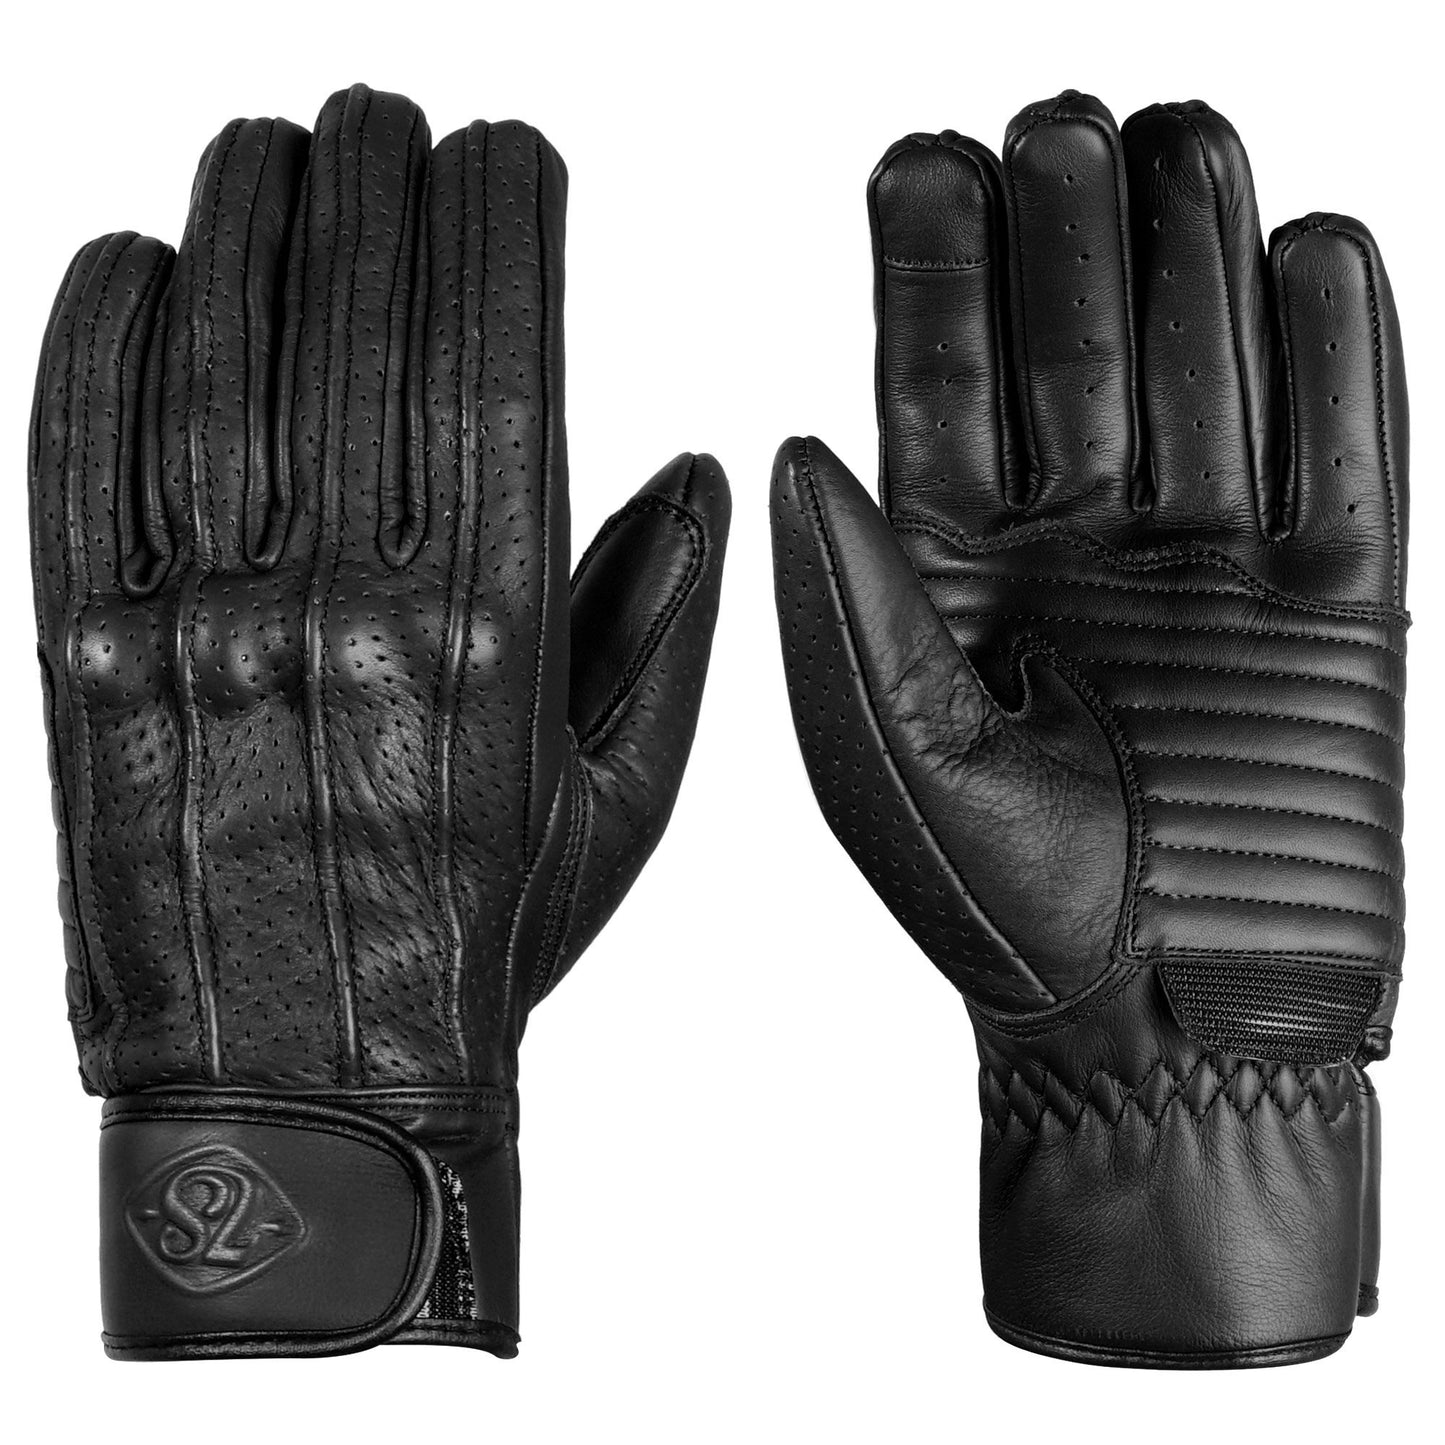 78 Motor Co Speed Gloves MKIII - Nappa Black